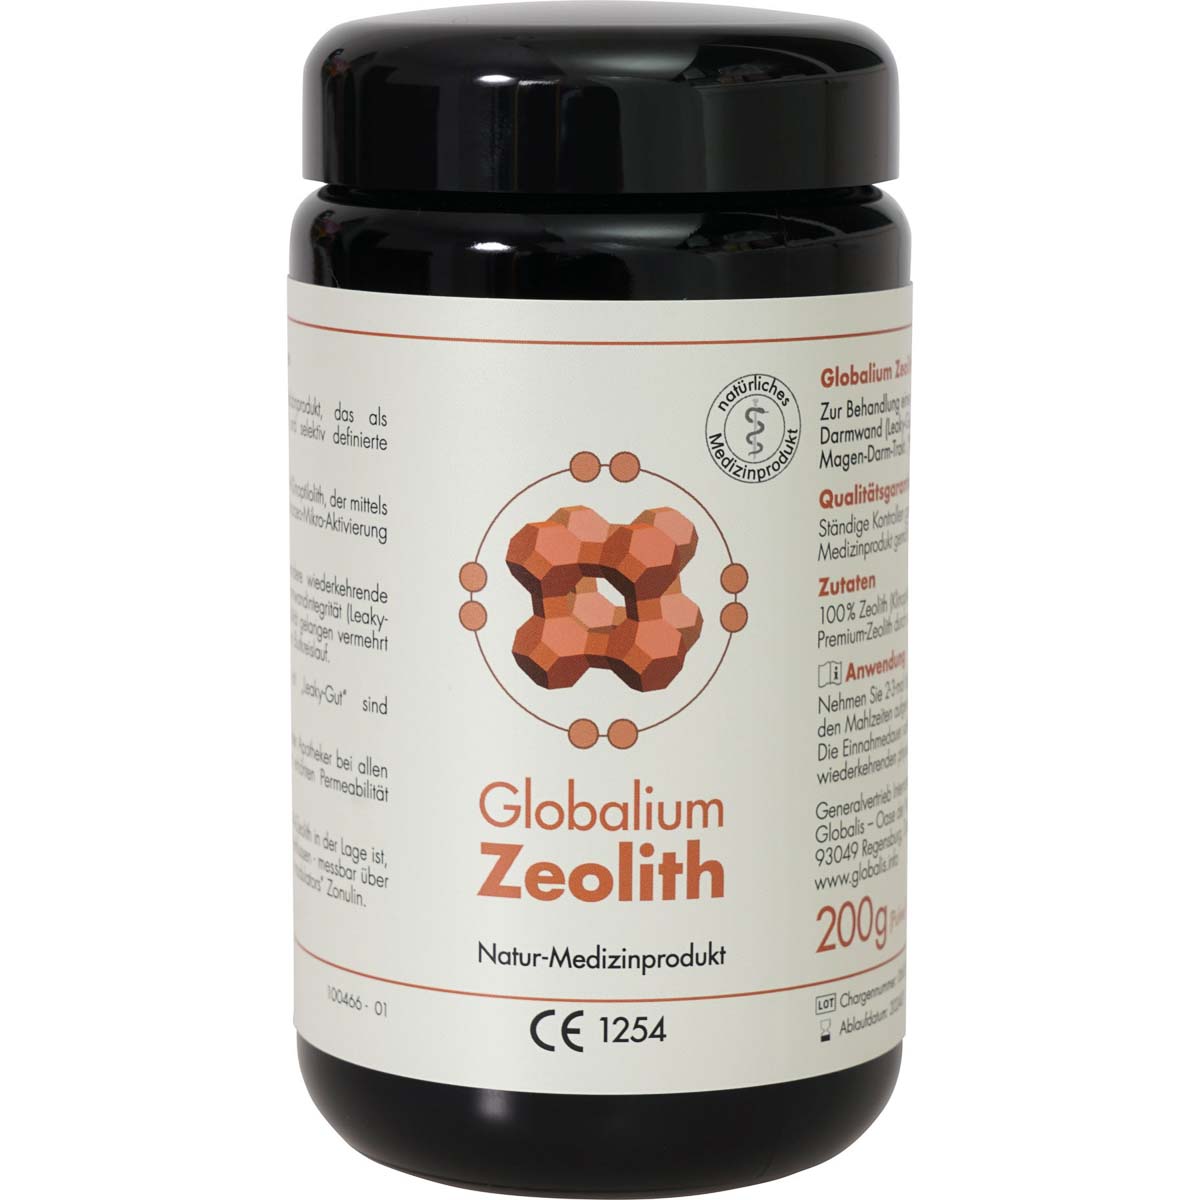 Globalium Zeolithpulver Medizinprodukt 200 g